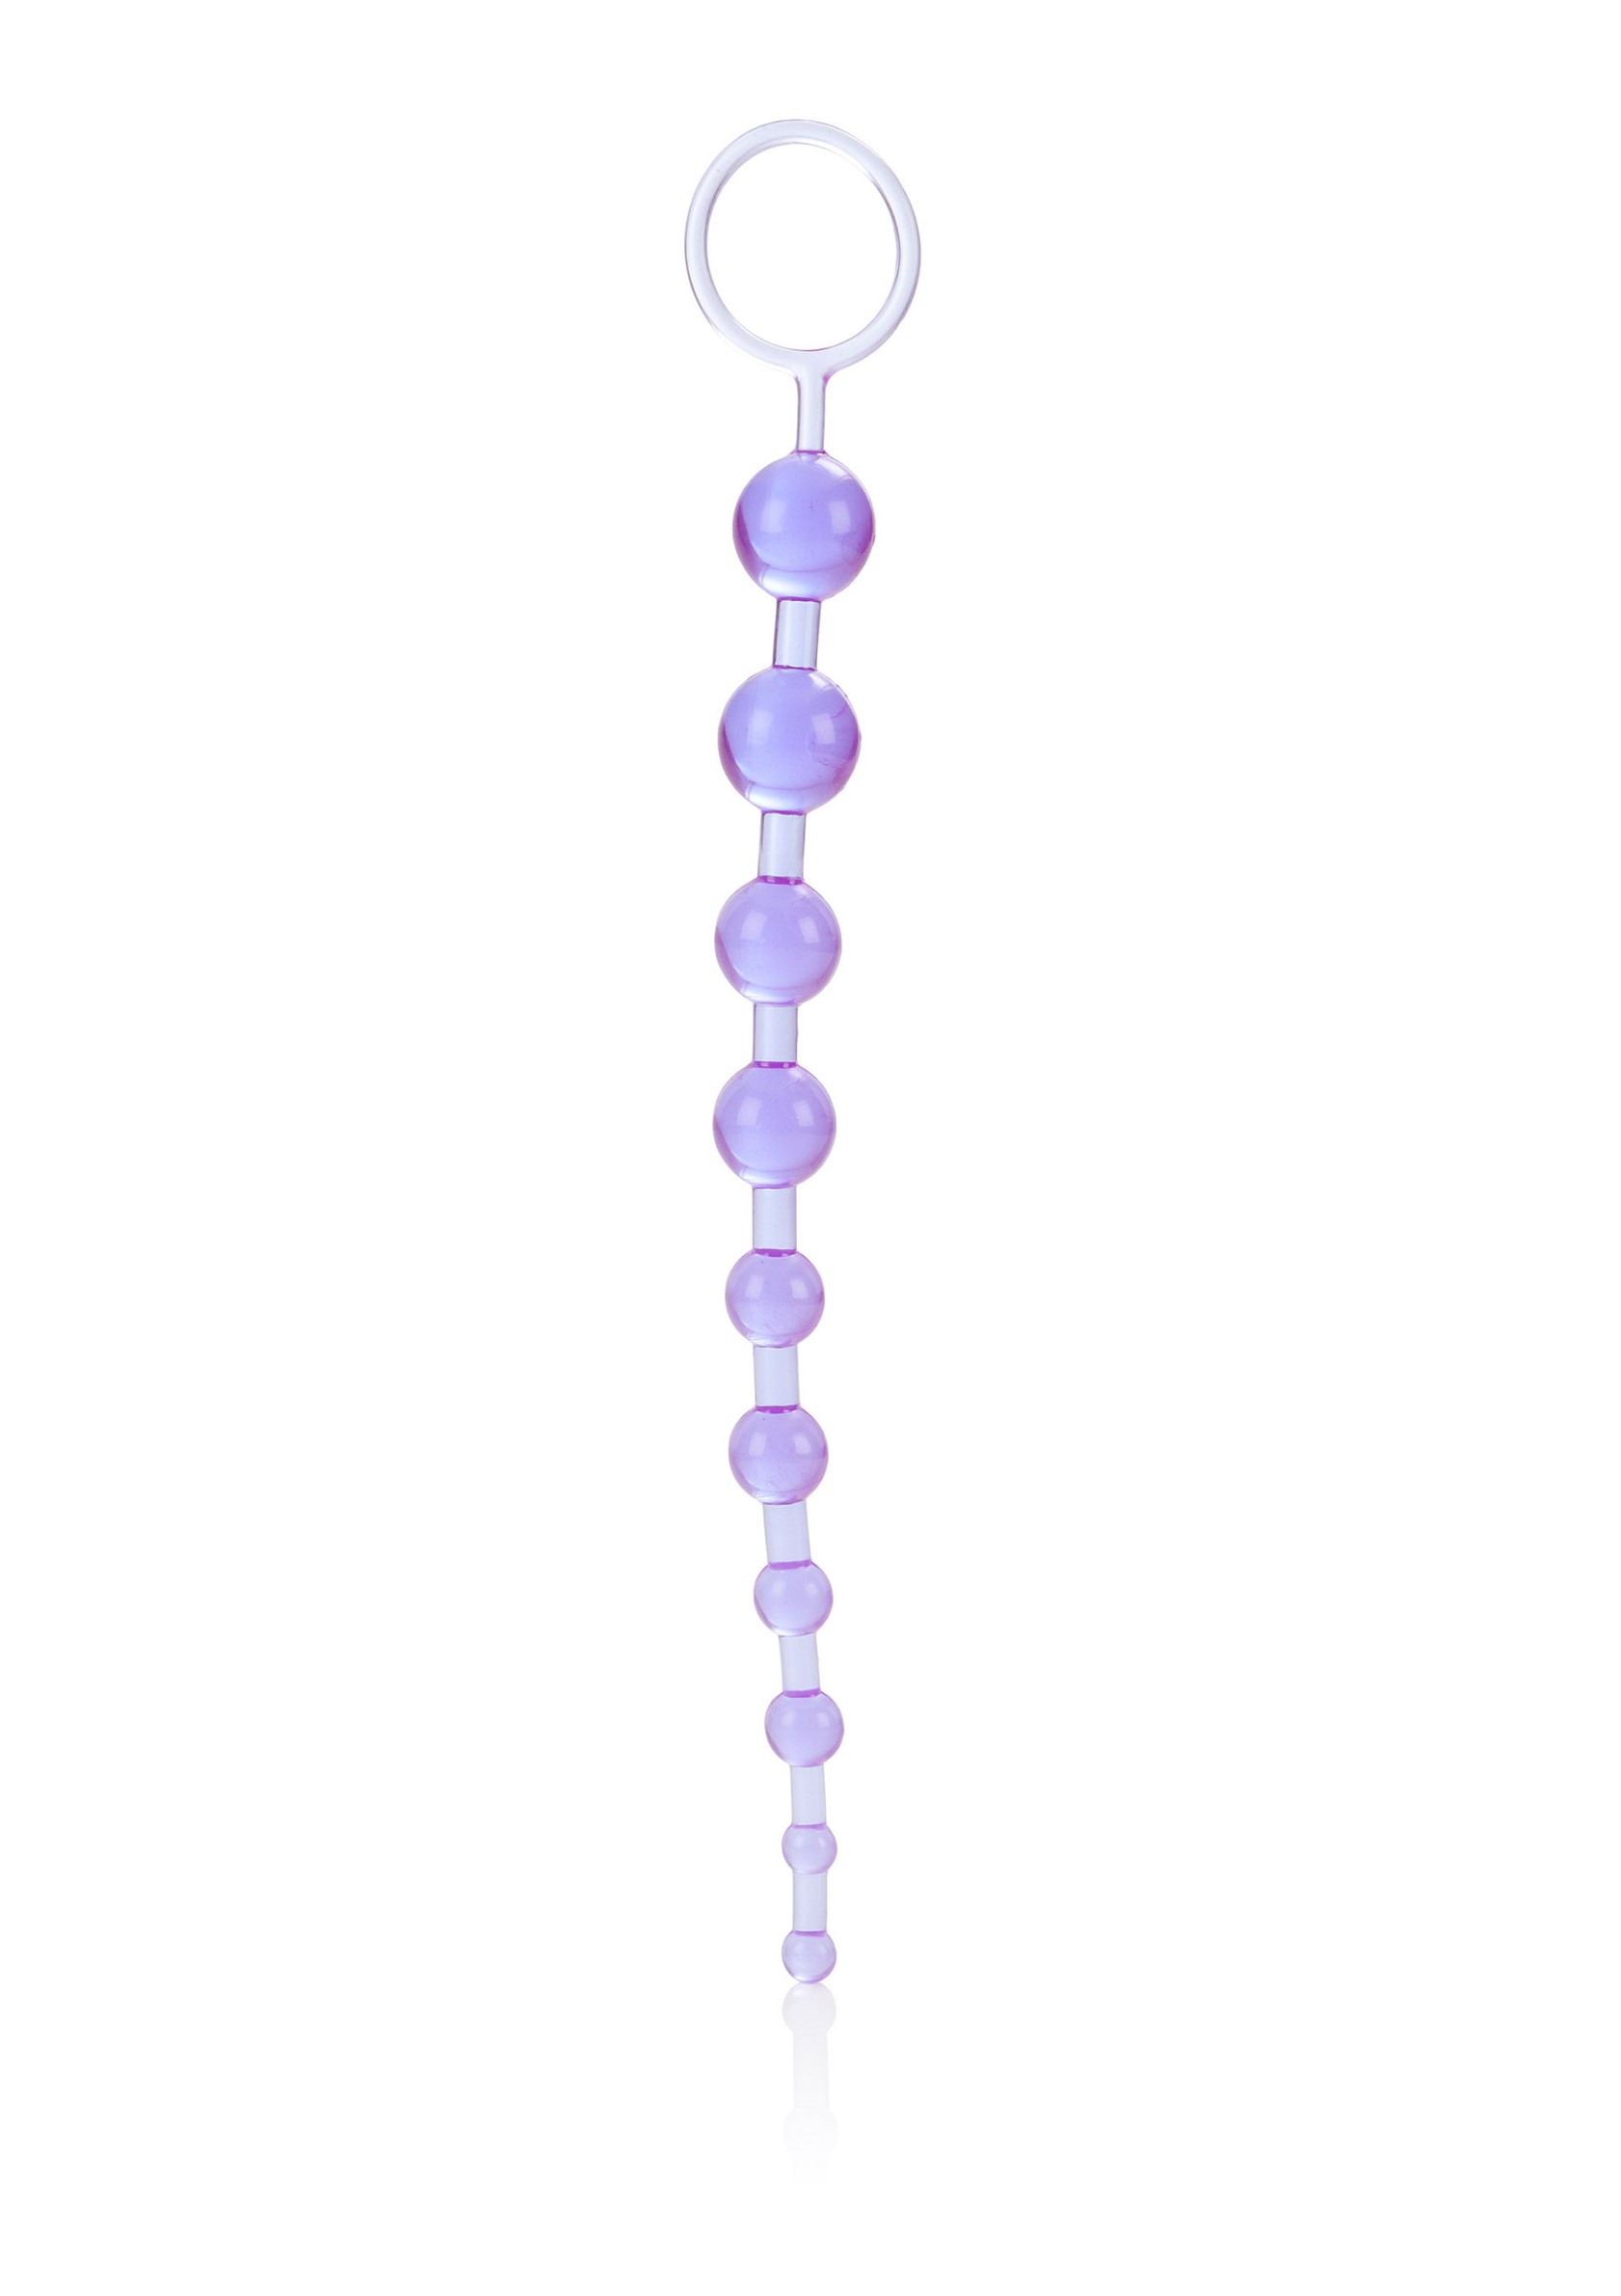 X-10 Beads